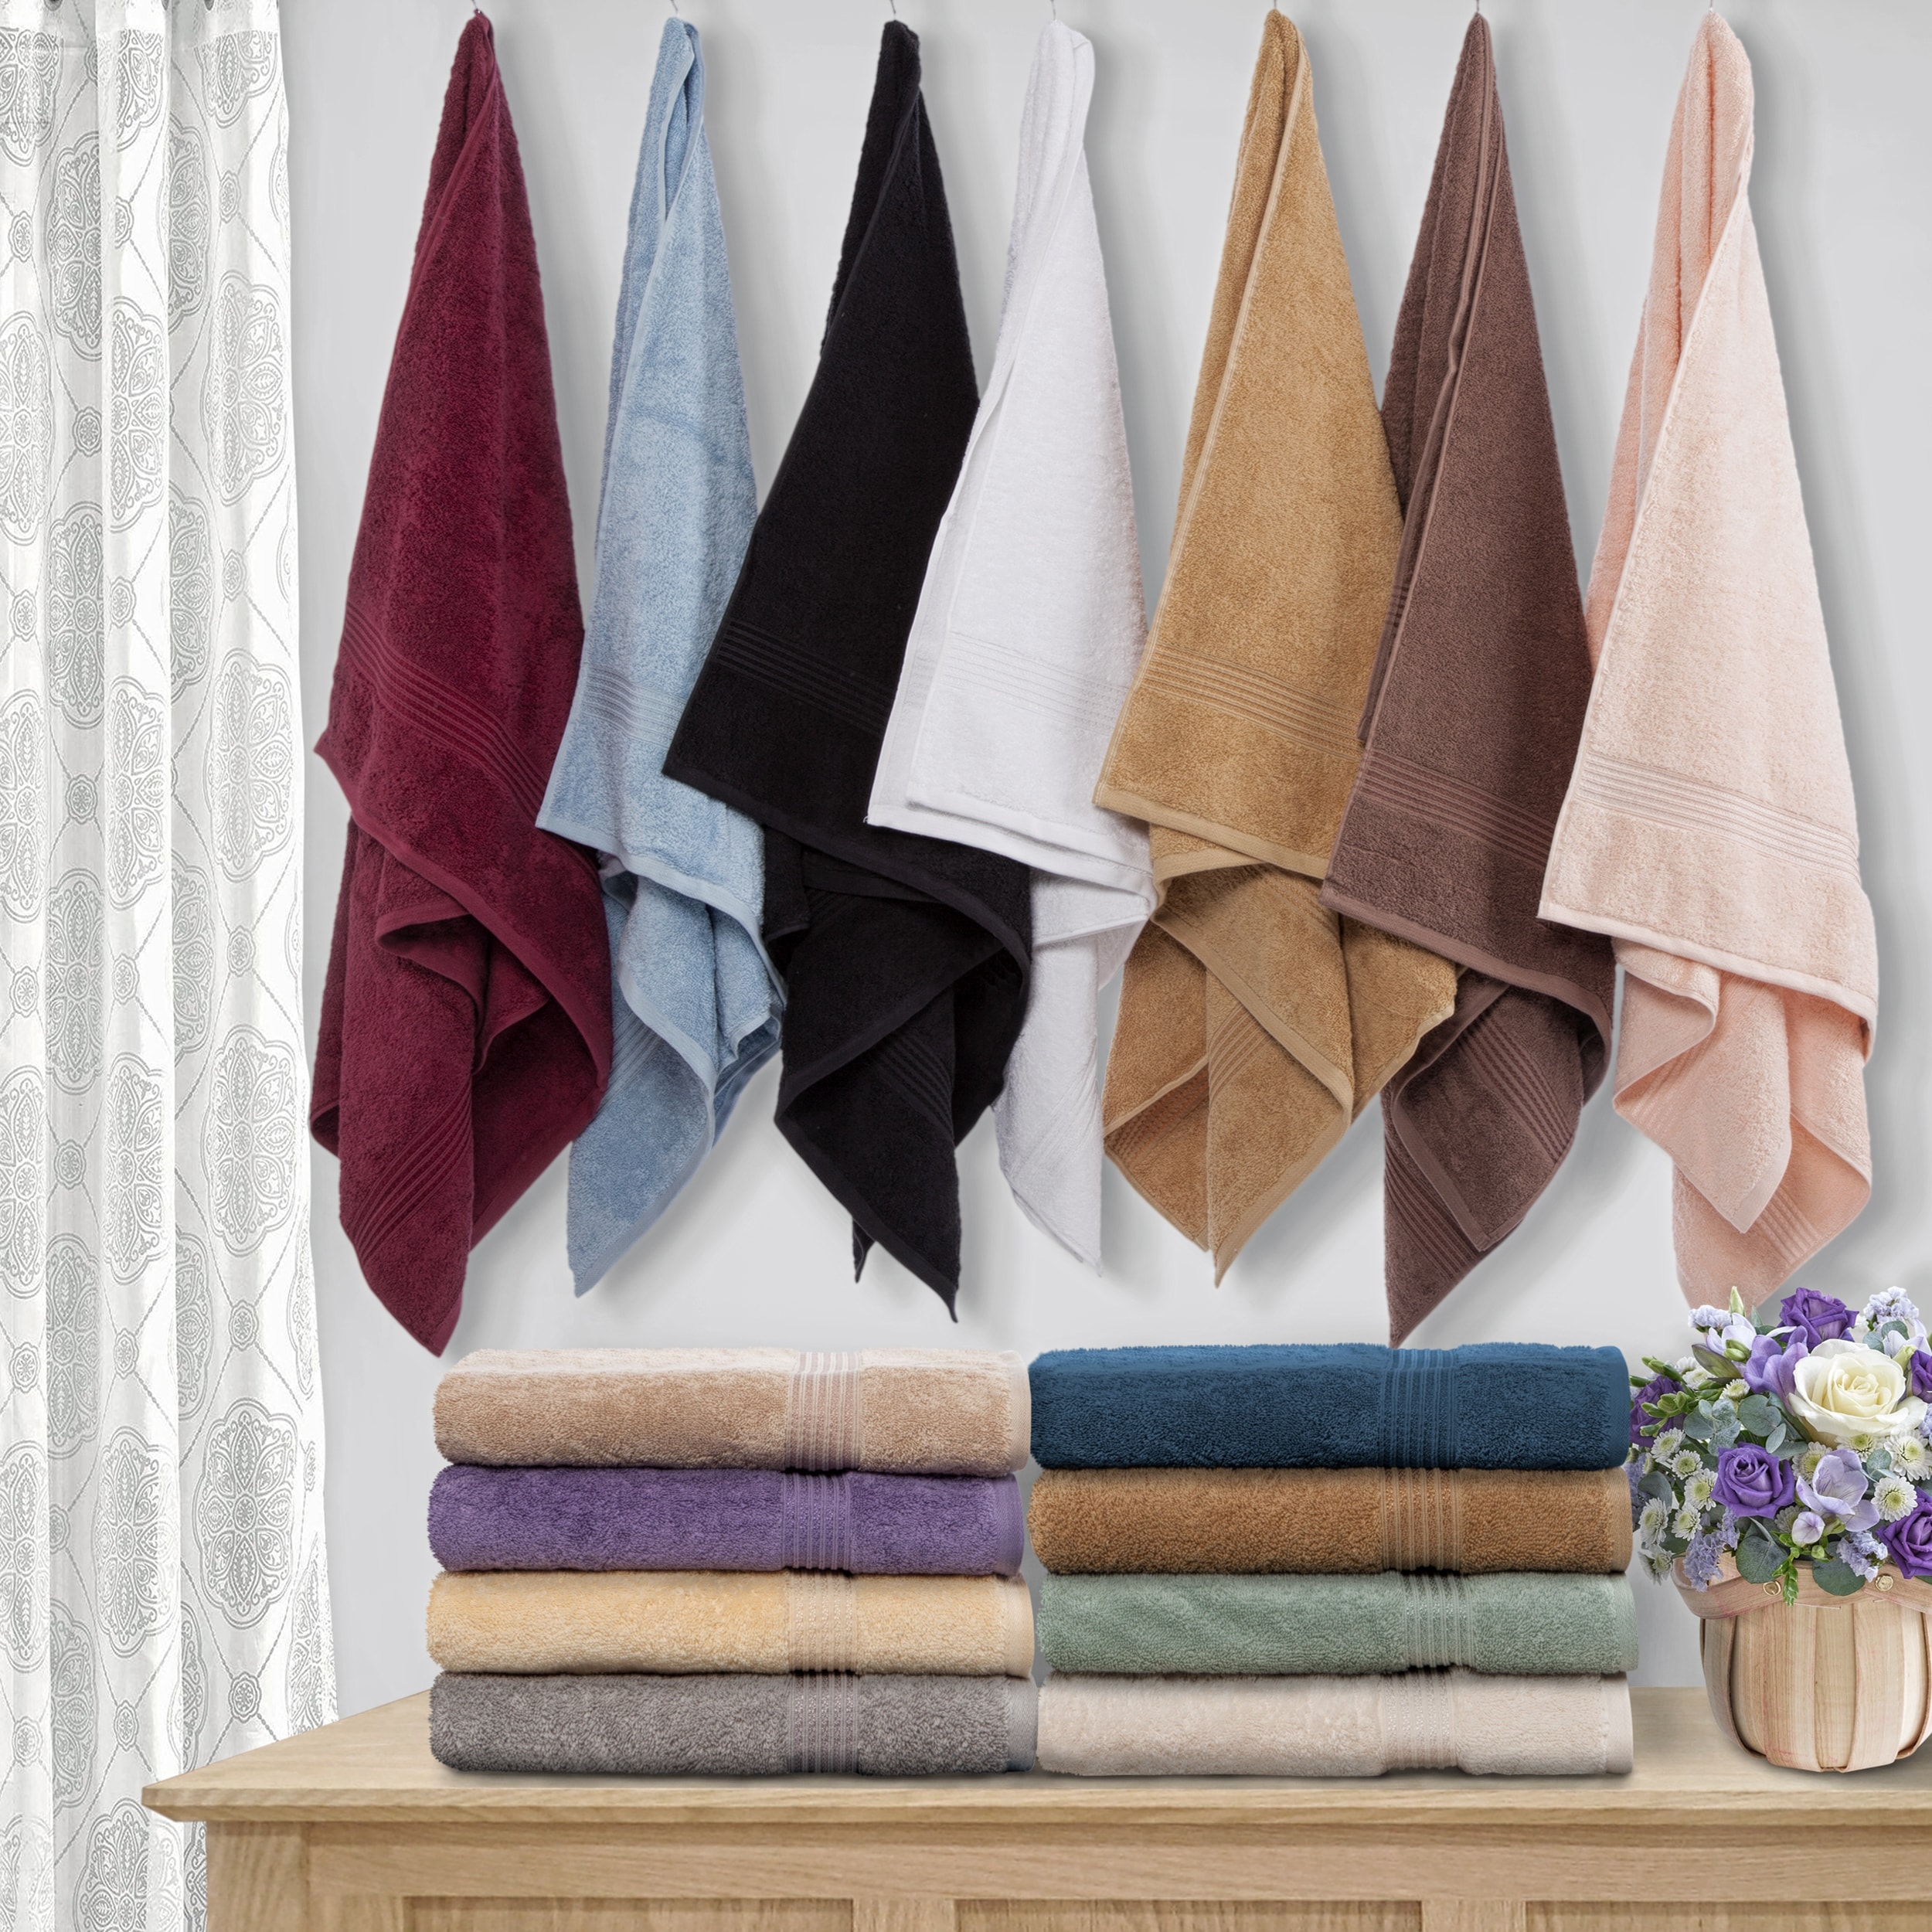 Set of 6 Wamsutta Egyptian Cotton Bathroom Towels - Wash Cloths